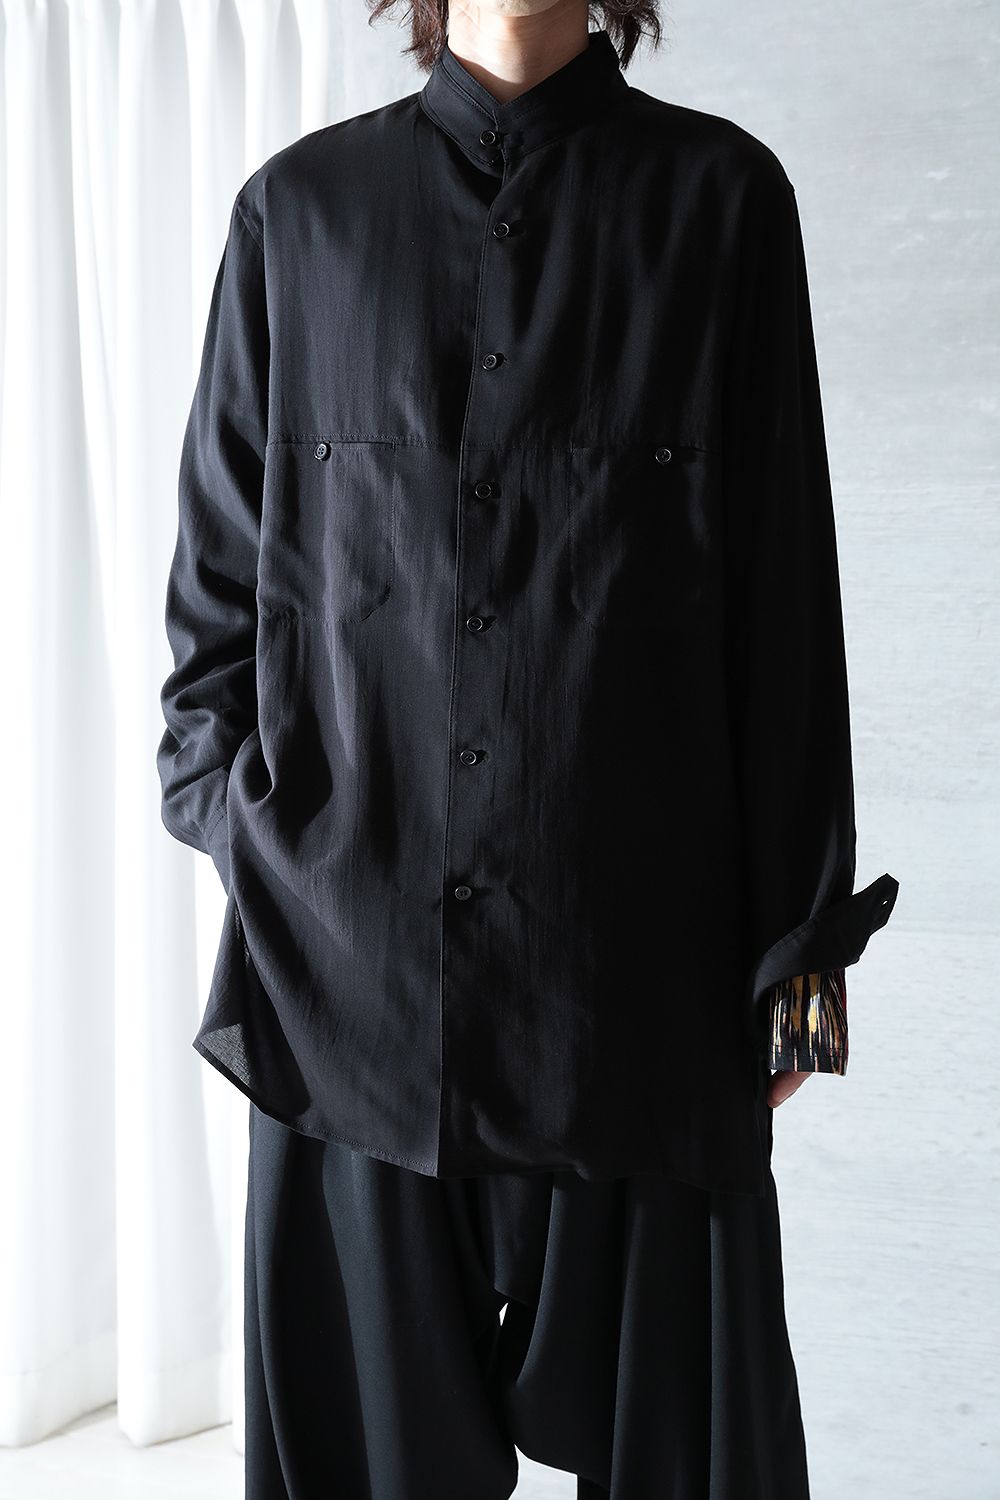 Yohji Yamamoto pour homme 環縫い左右非対称シャツ - シャツ